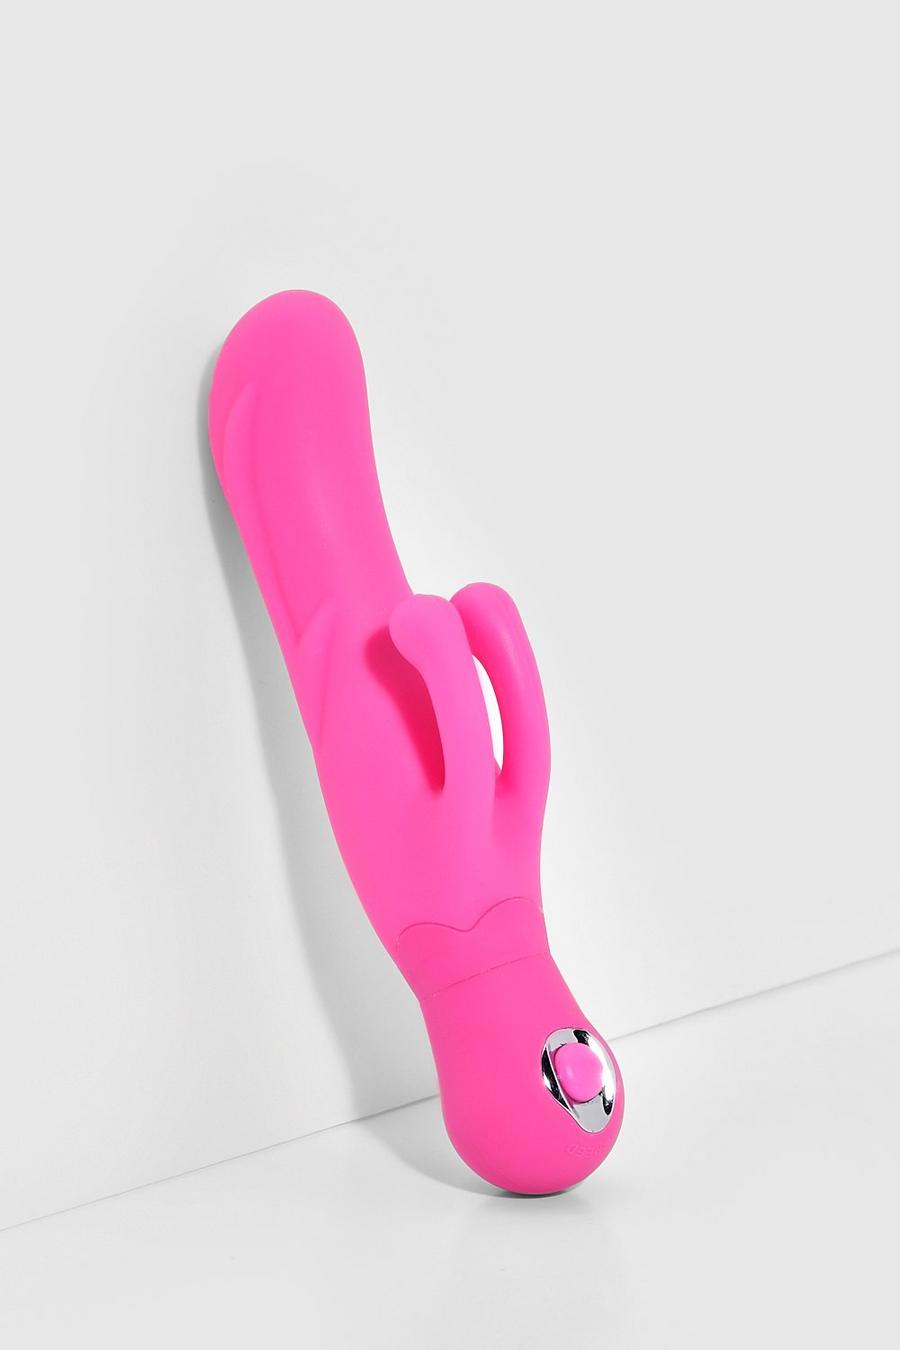 Vibrator (sex toy) - Wikipedia